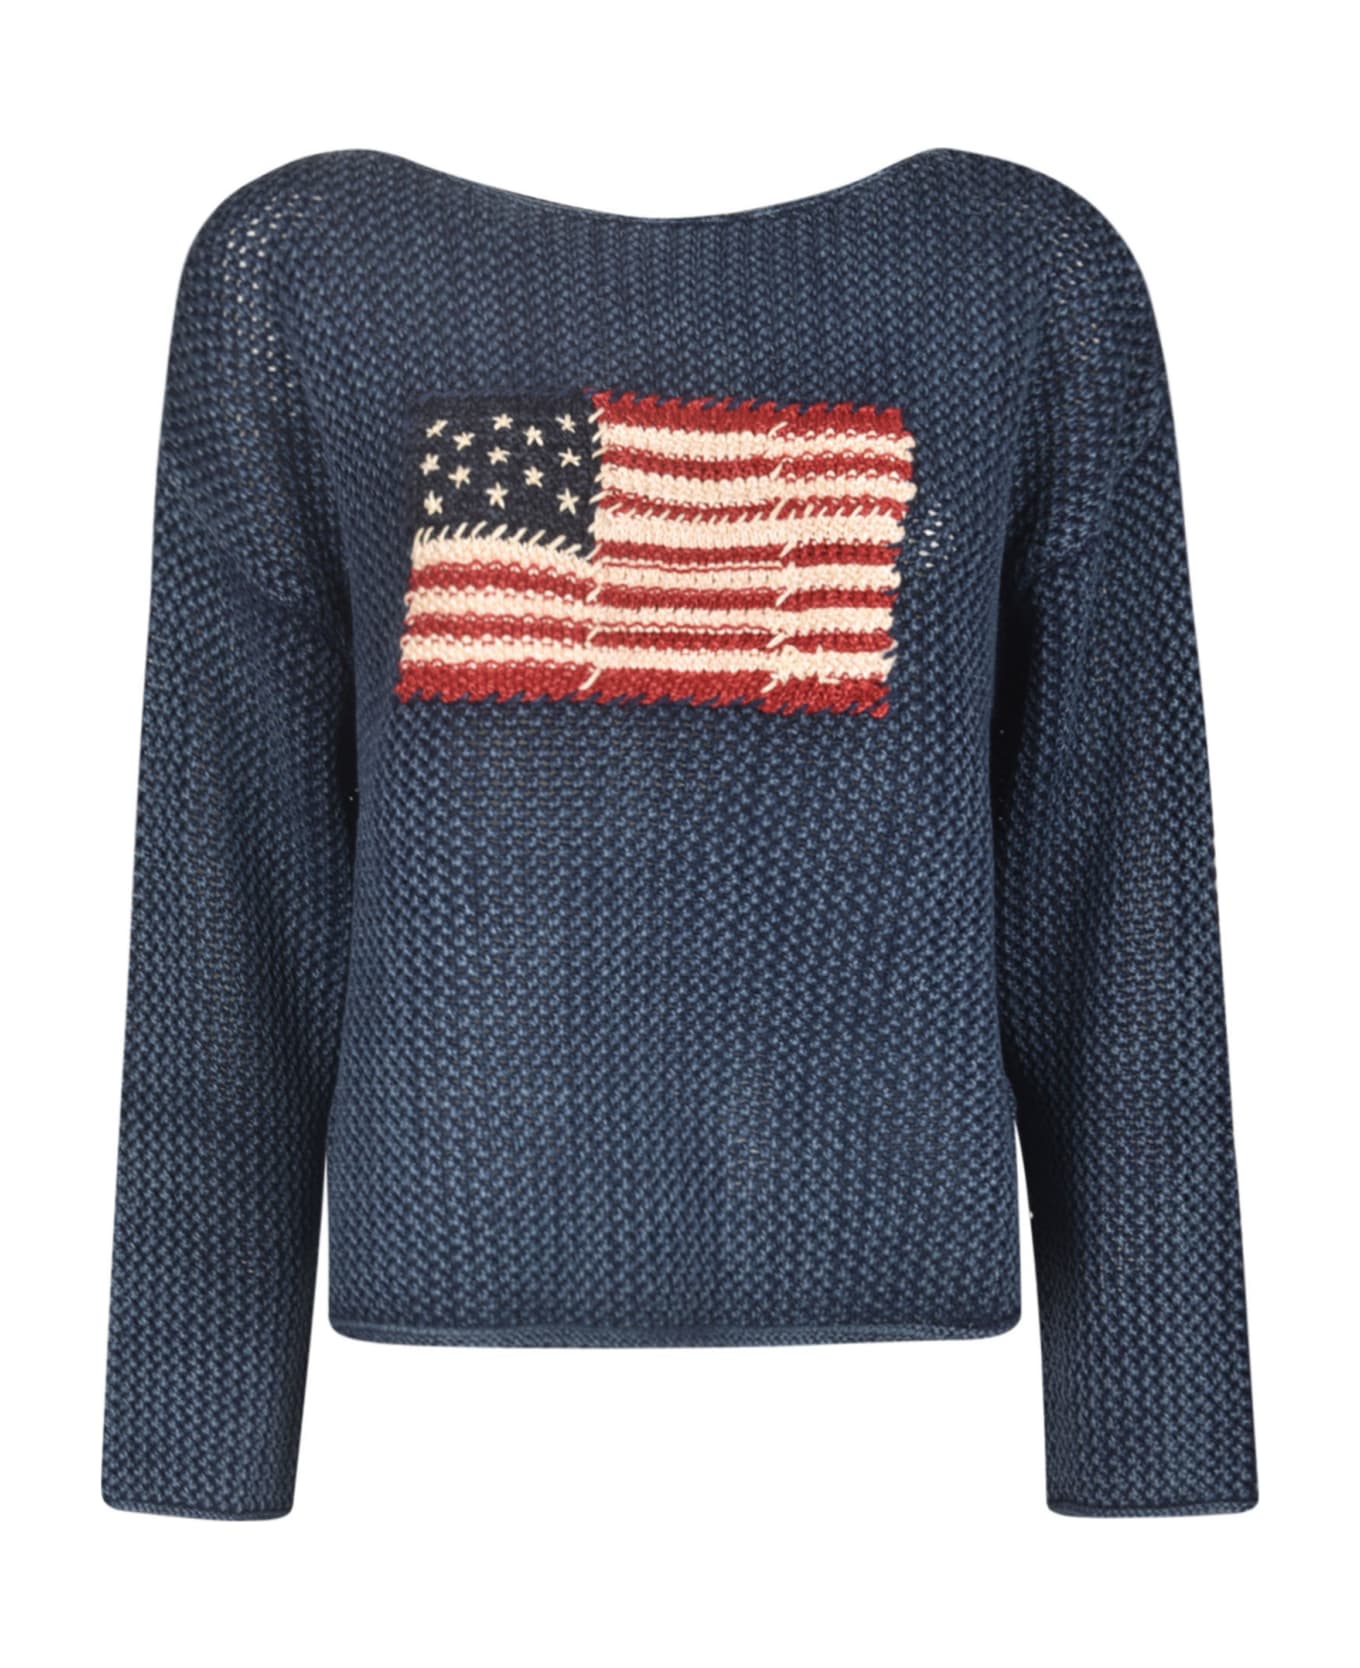 Polo Ralph Lauren American Flag Crocket Sweatshirt - BLUEMULTI